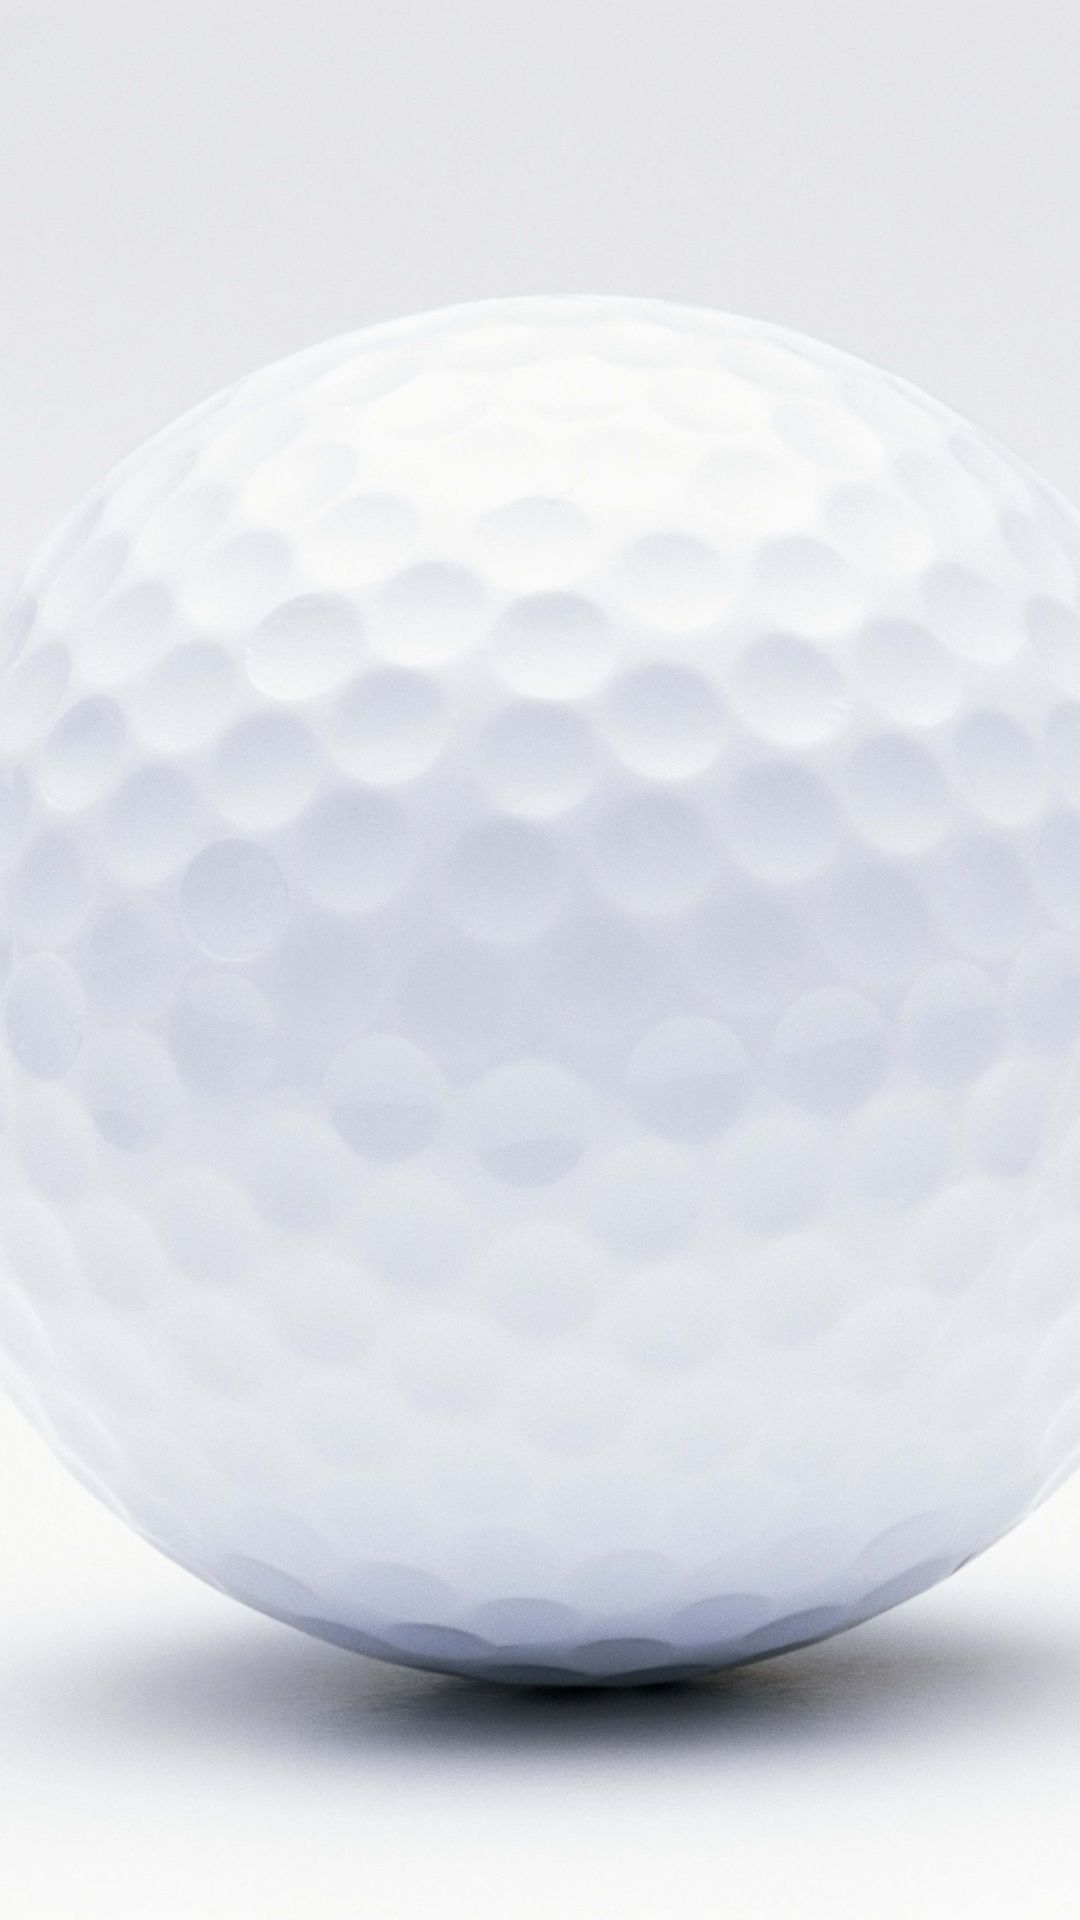 Download Wallpaper 1080x1920 Golf, Ball, White background, Close ...